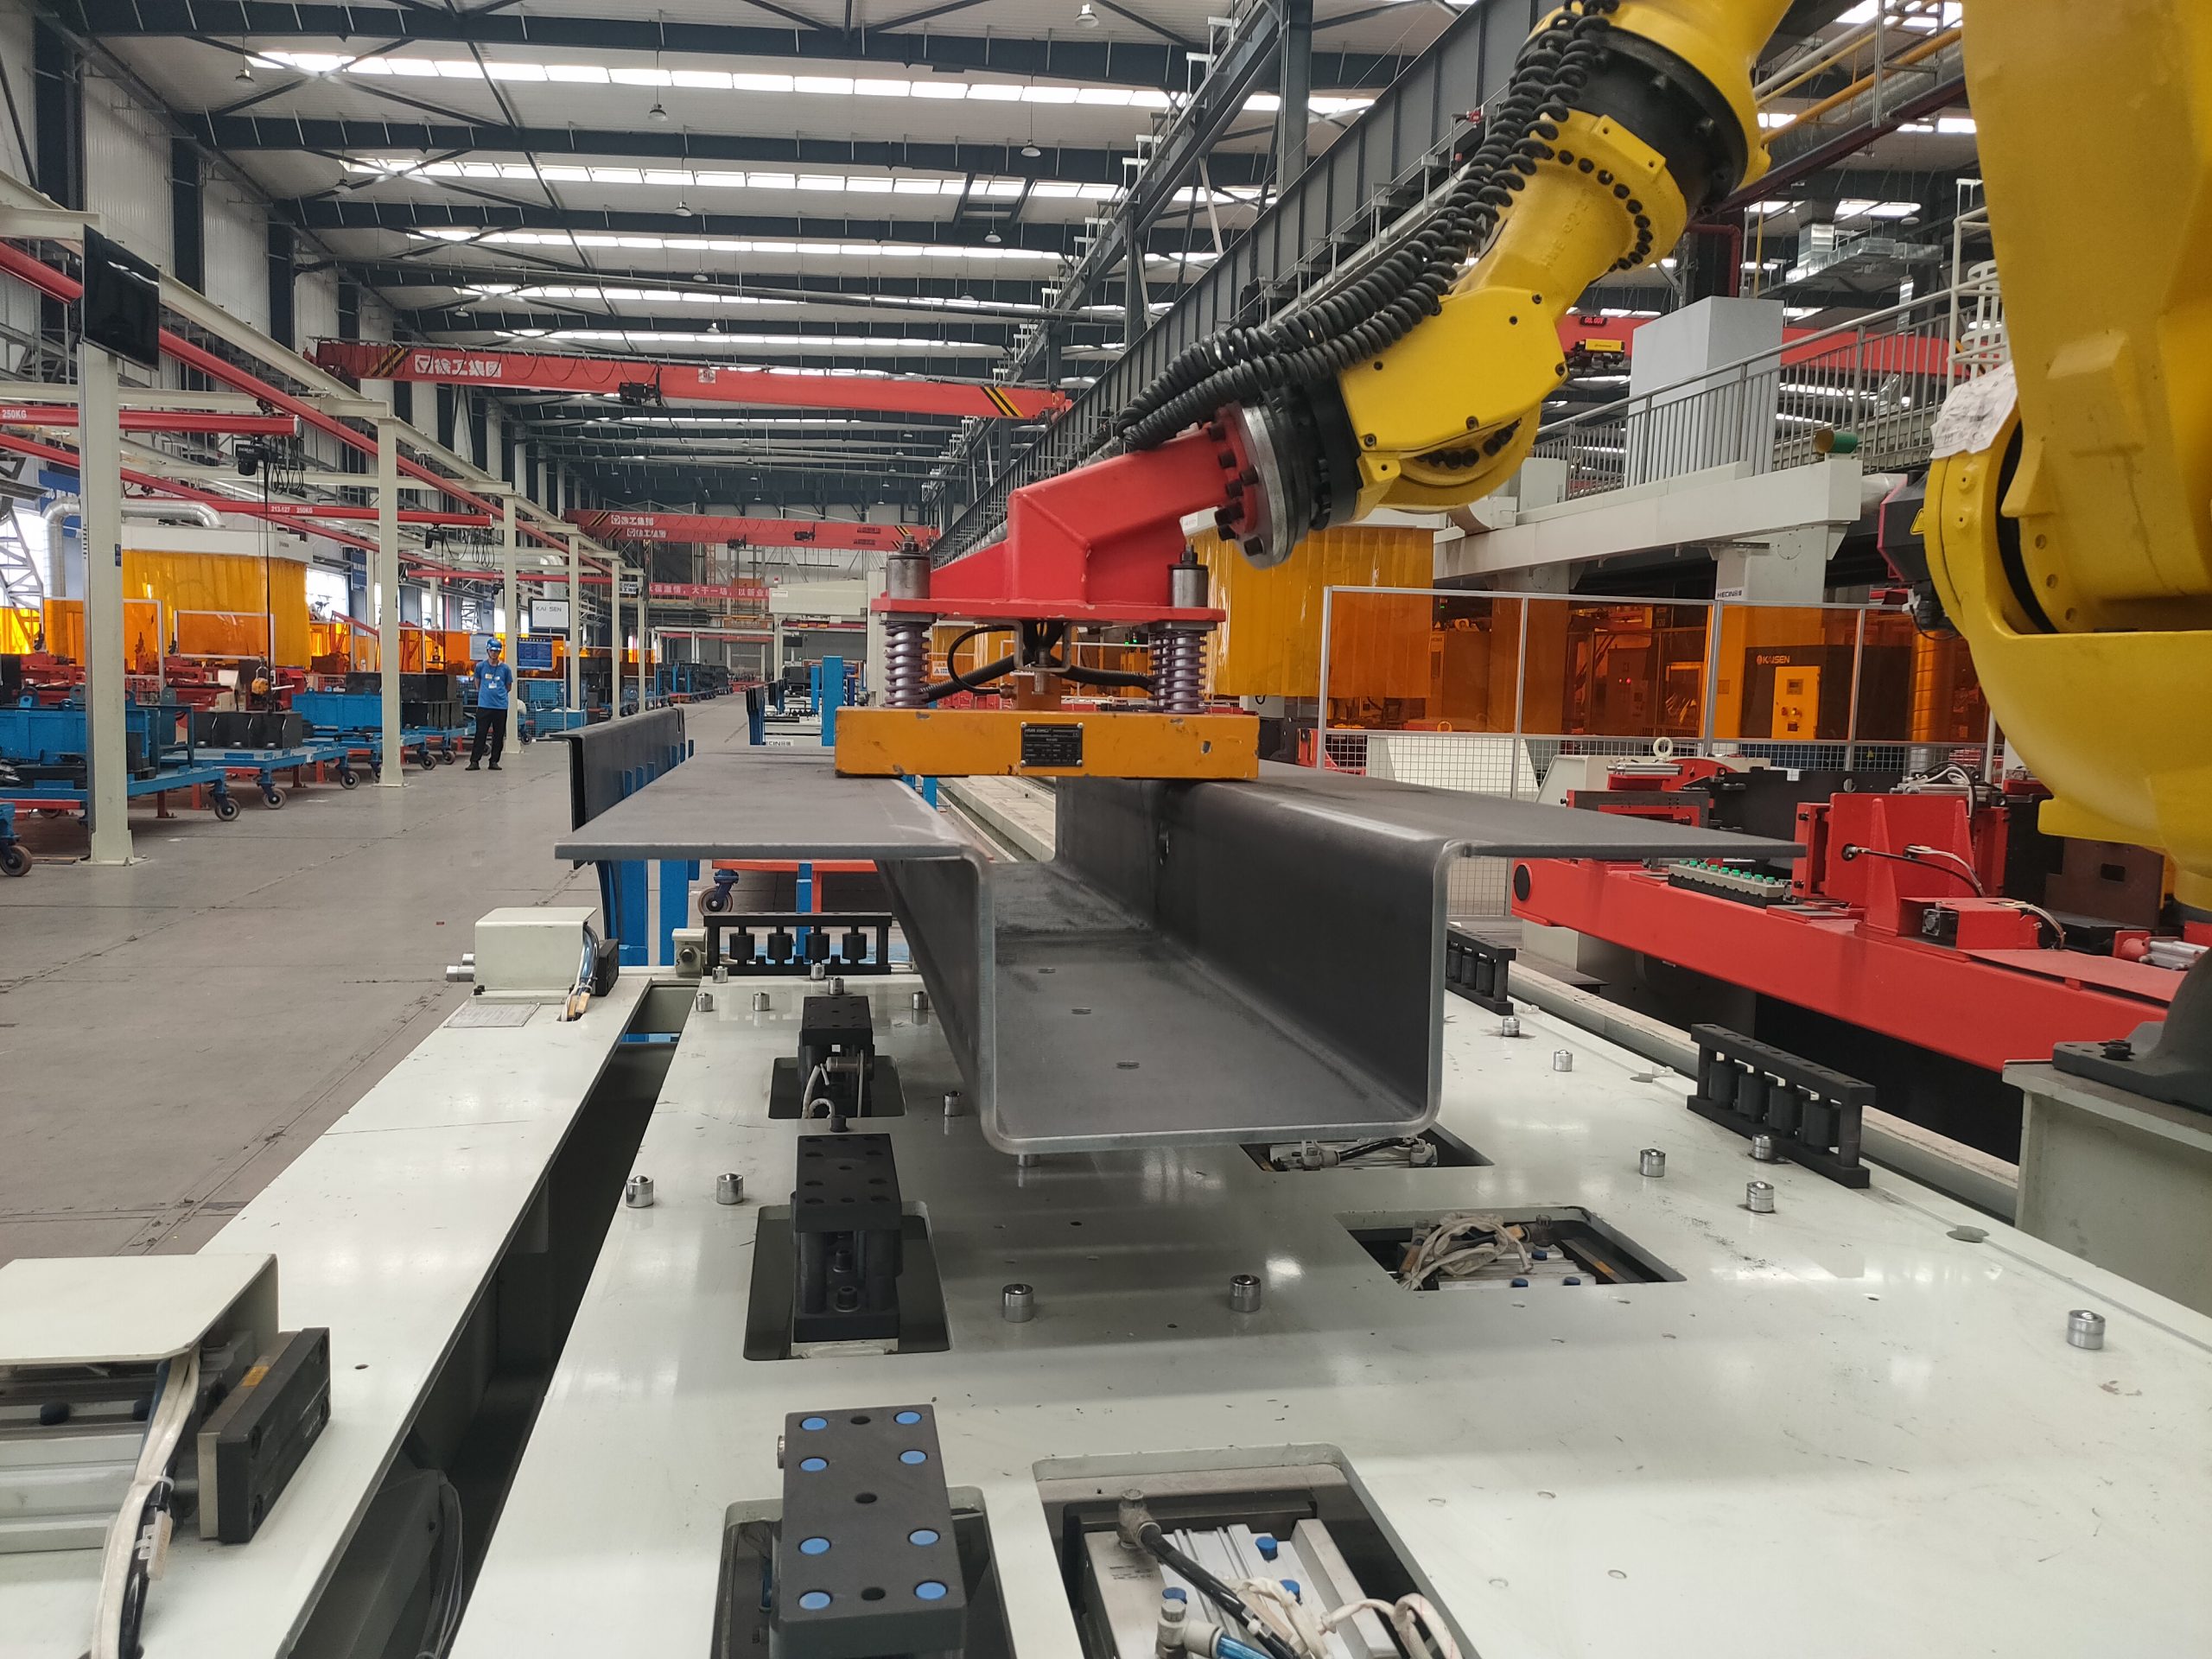 Magnetic gripper on articulated robot handling heavy steel workpiece for welding - HVR MAG